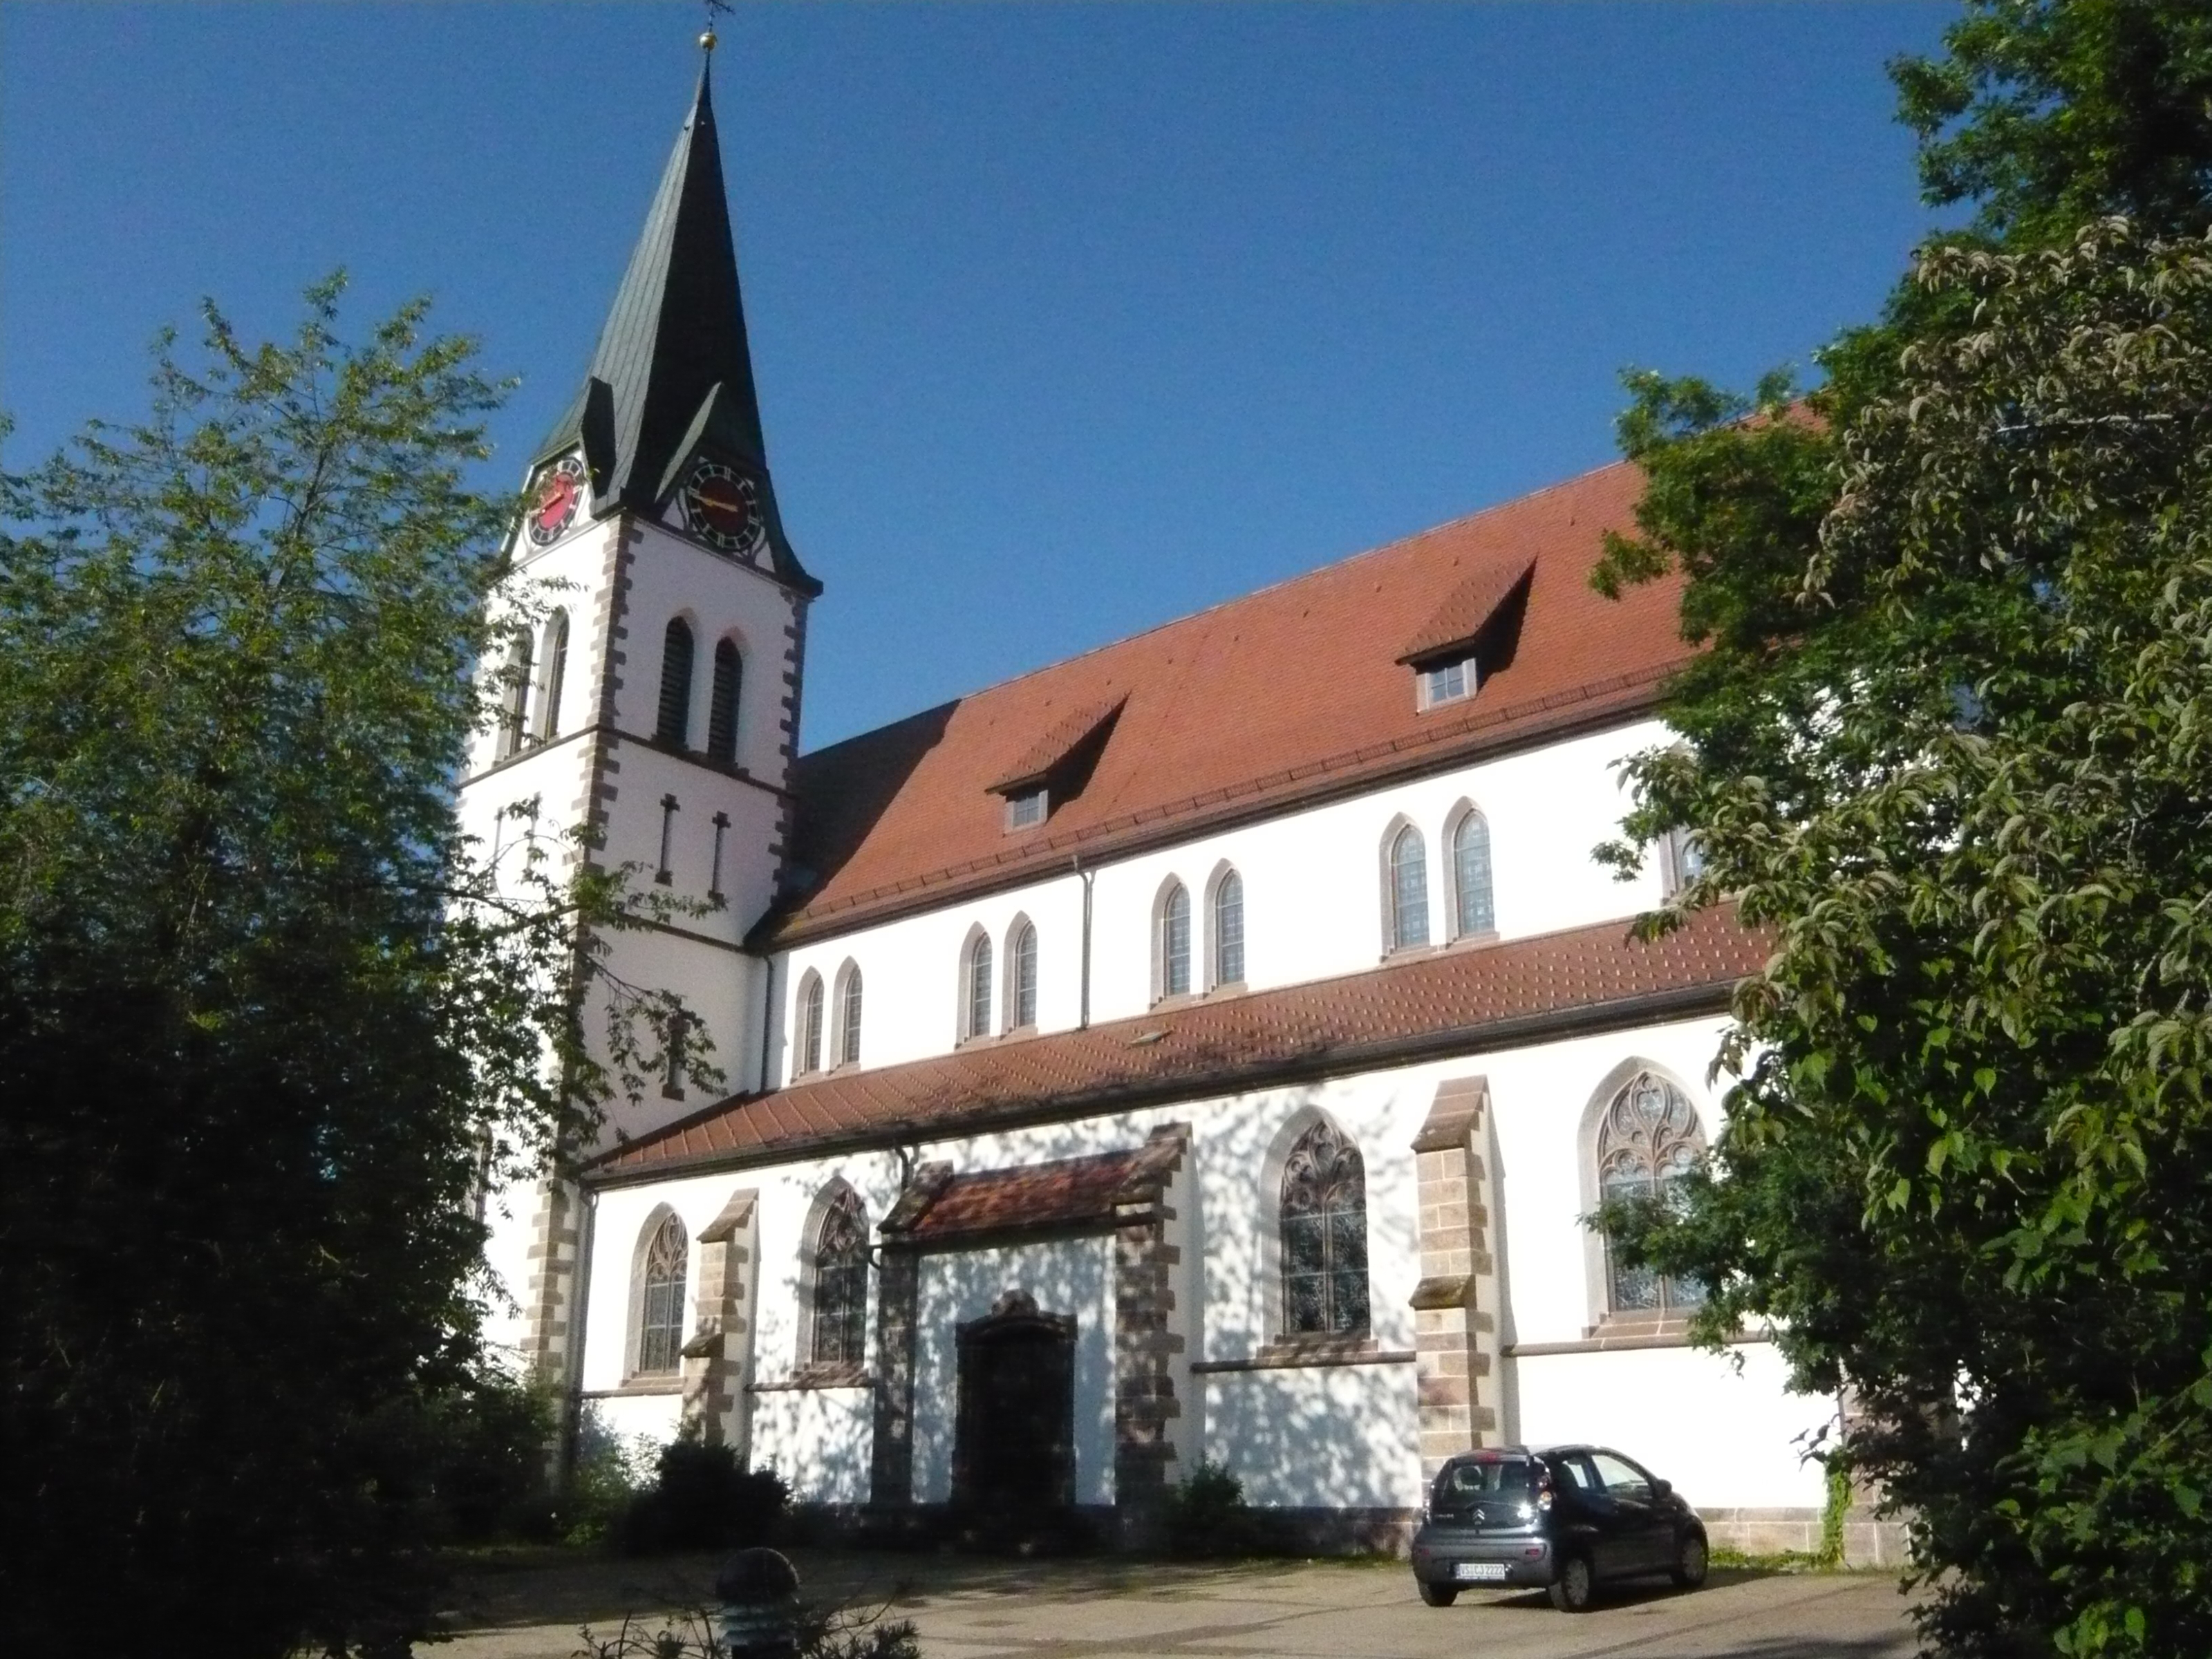 The St. James Catholic Church “Jakobus Kirche”